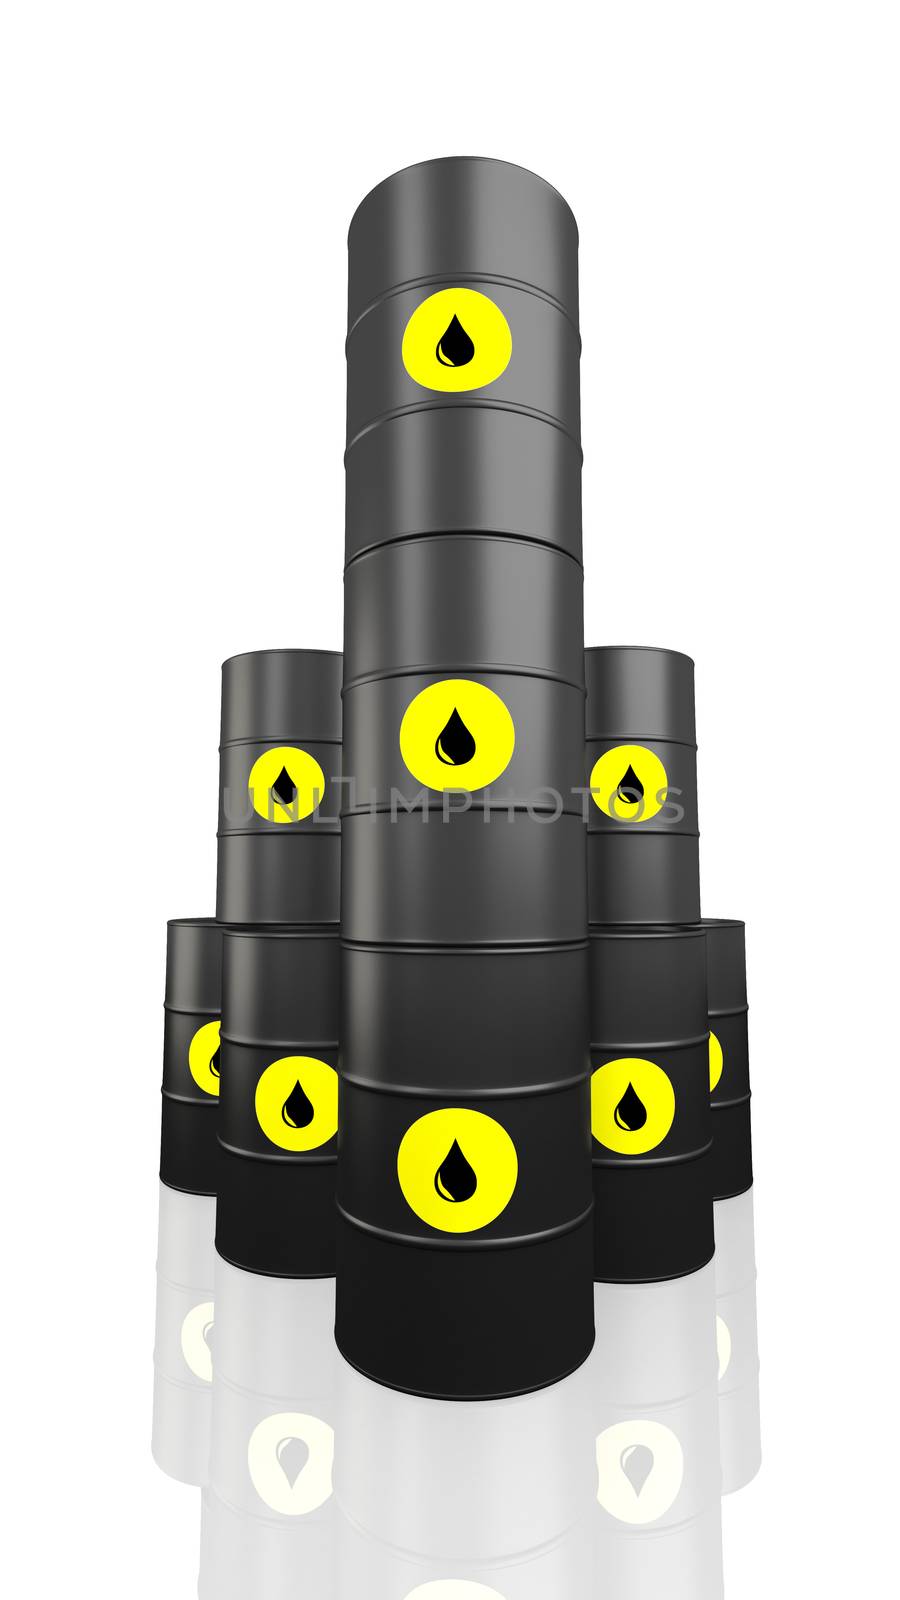 Oil barrel by klss